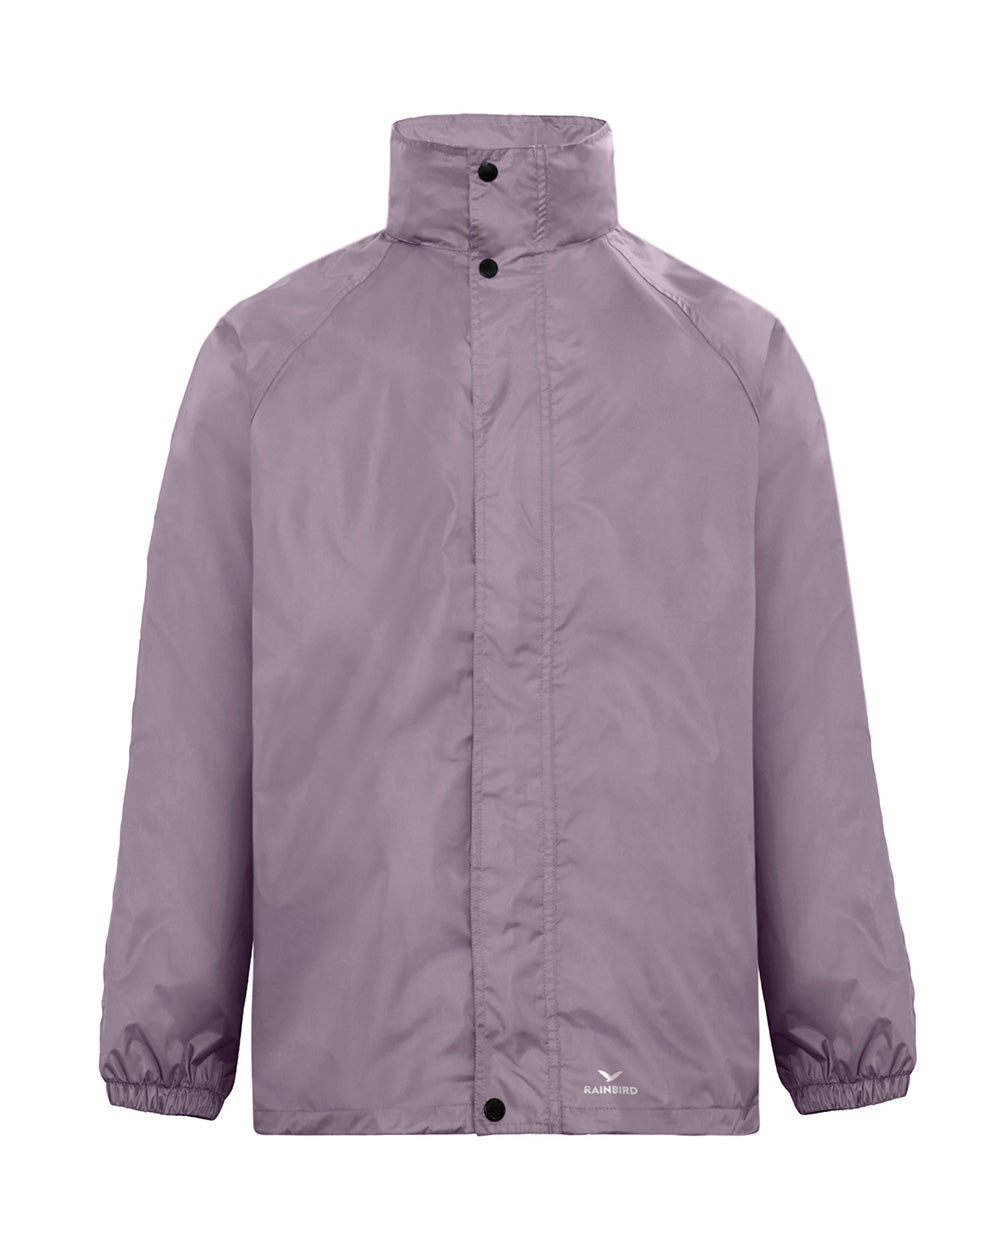 STOWaway Jacket in Lilac Ash